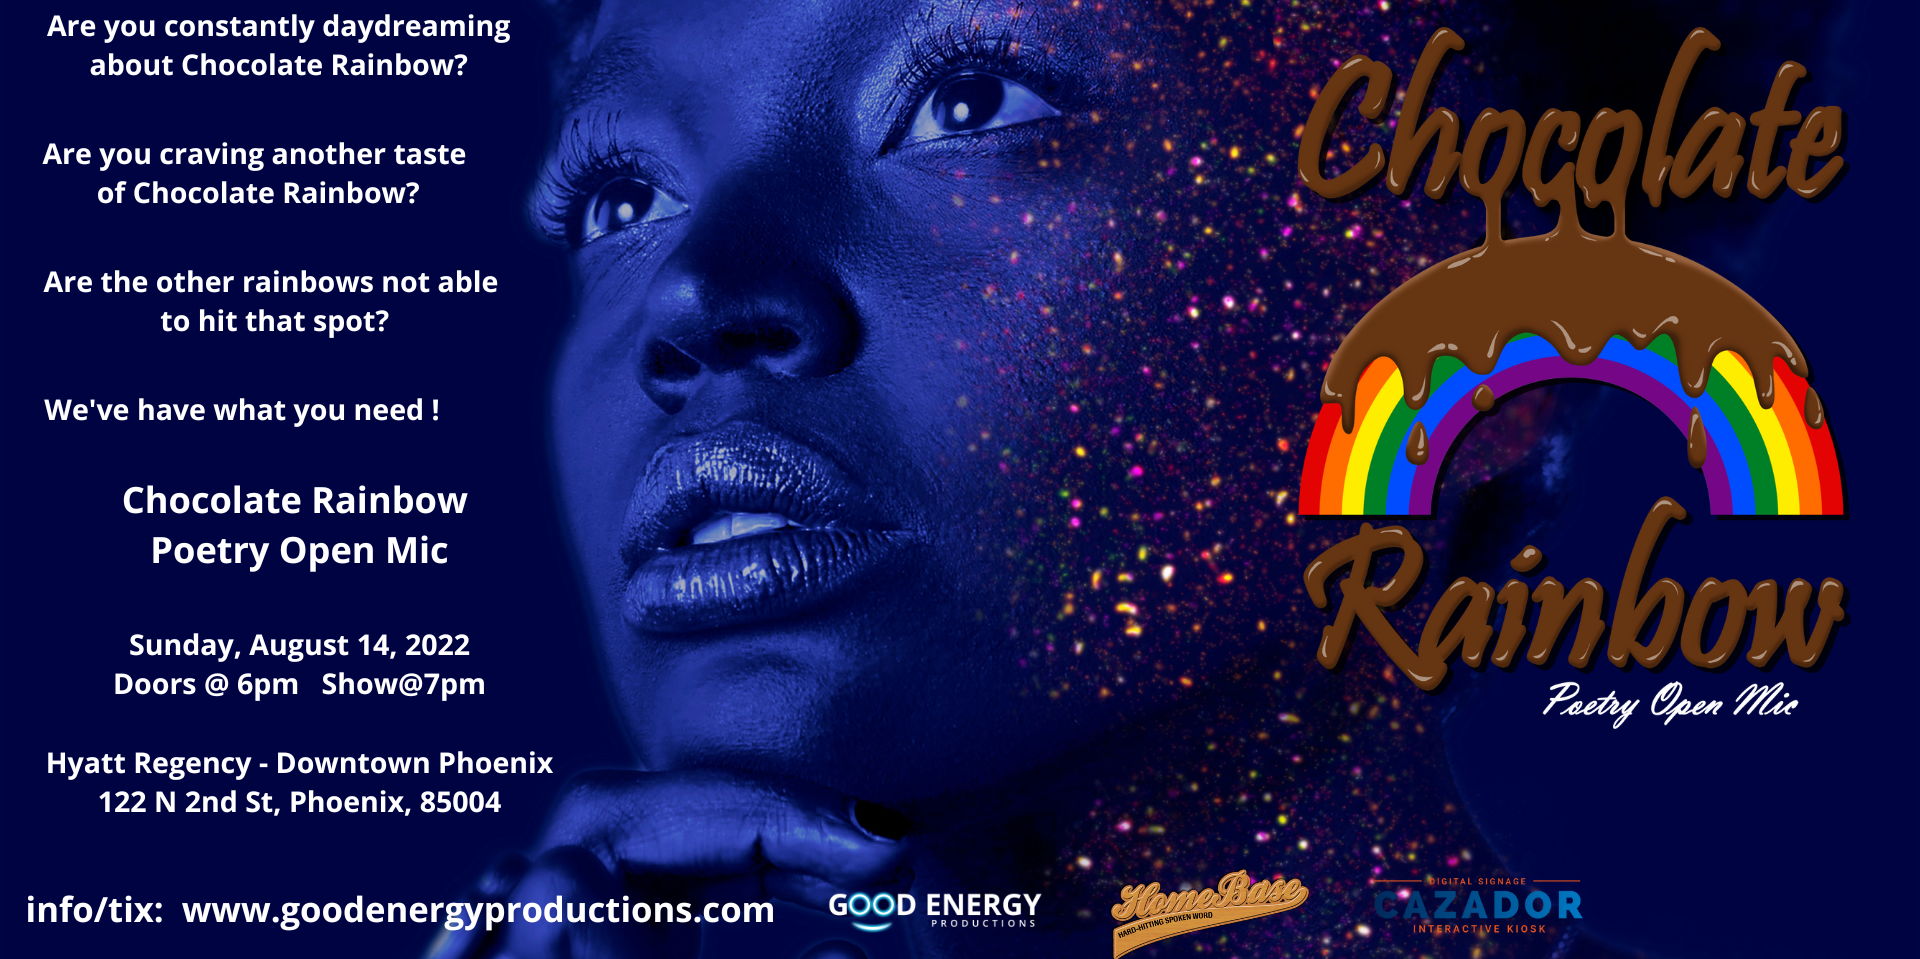 Chocolate Rainbow Poetry Open Mic promotional image